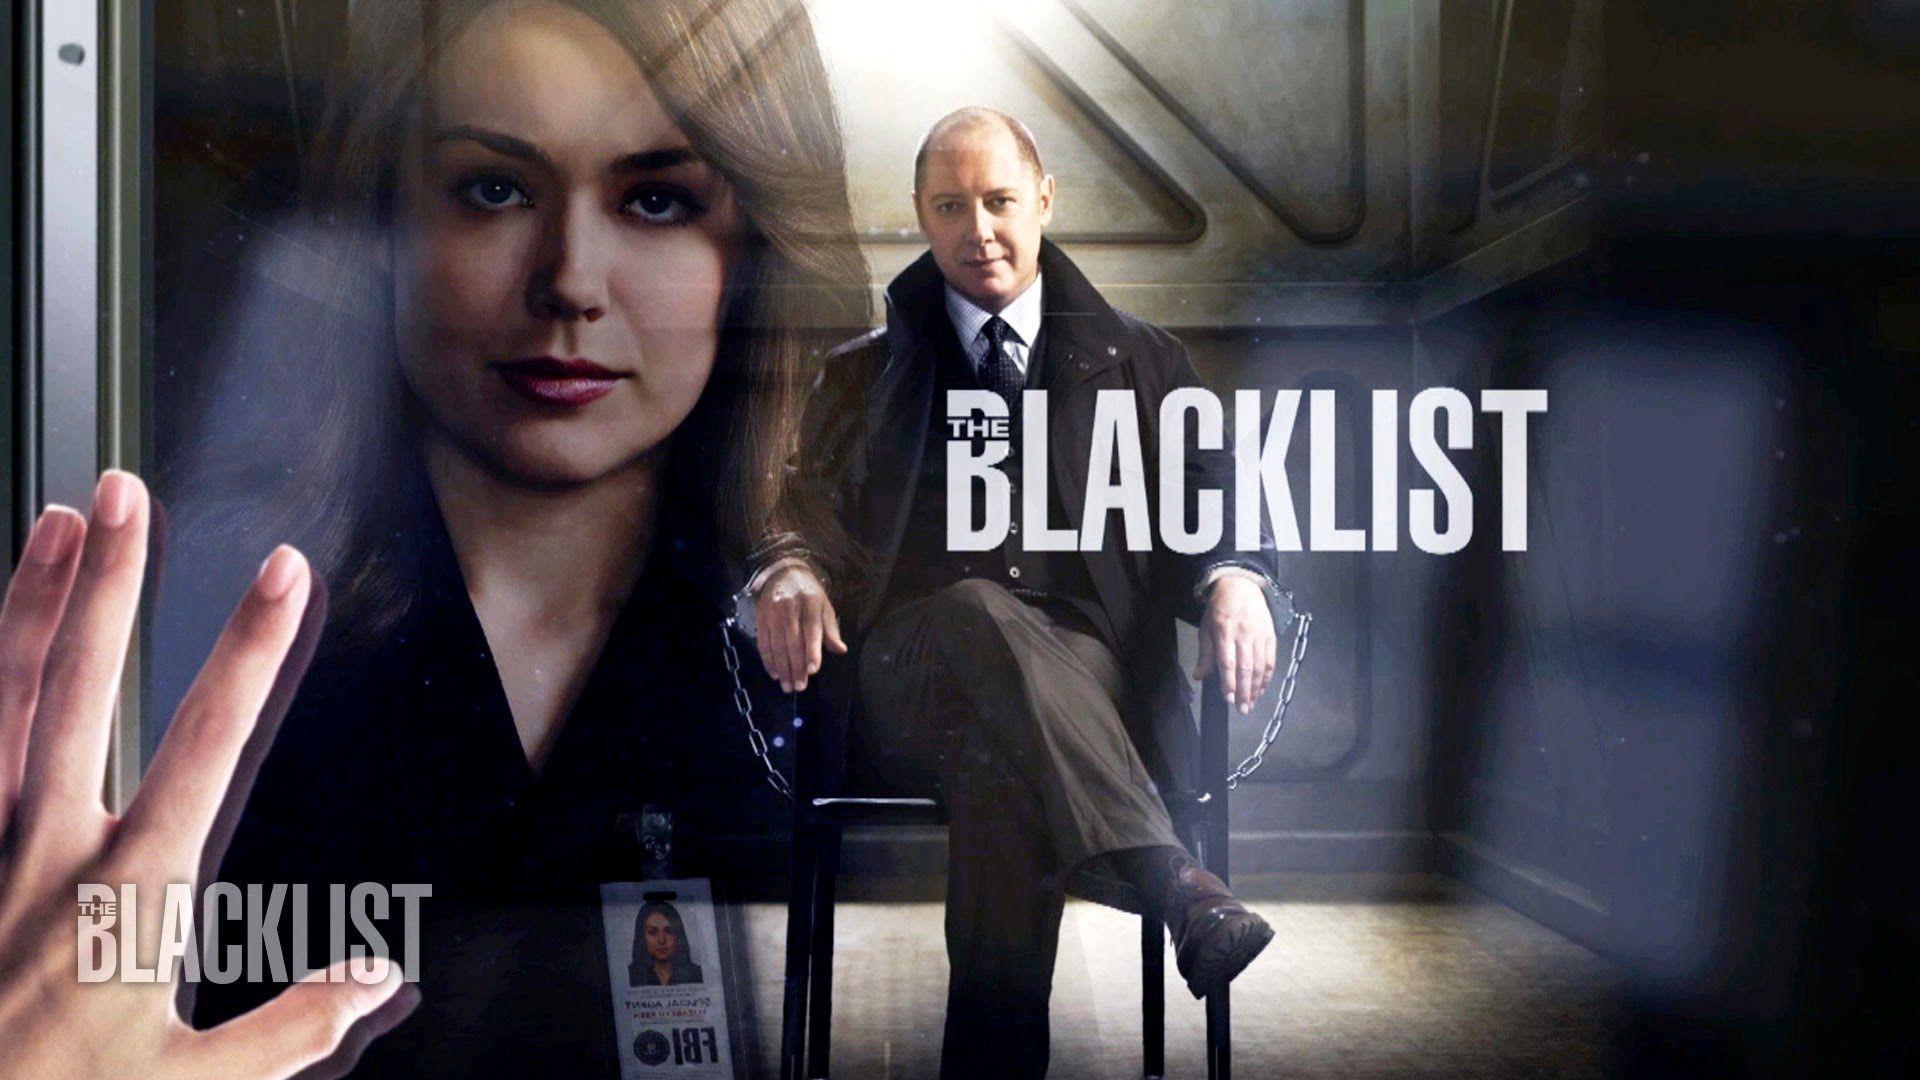 The Blacklist Wallpaper, 36 The Blacklist Gallery of Background